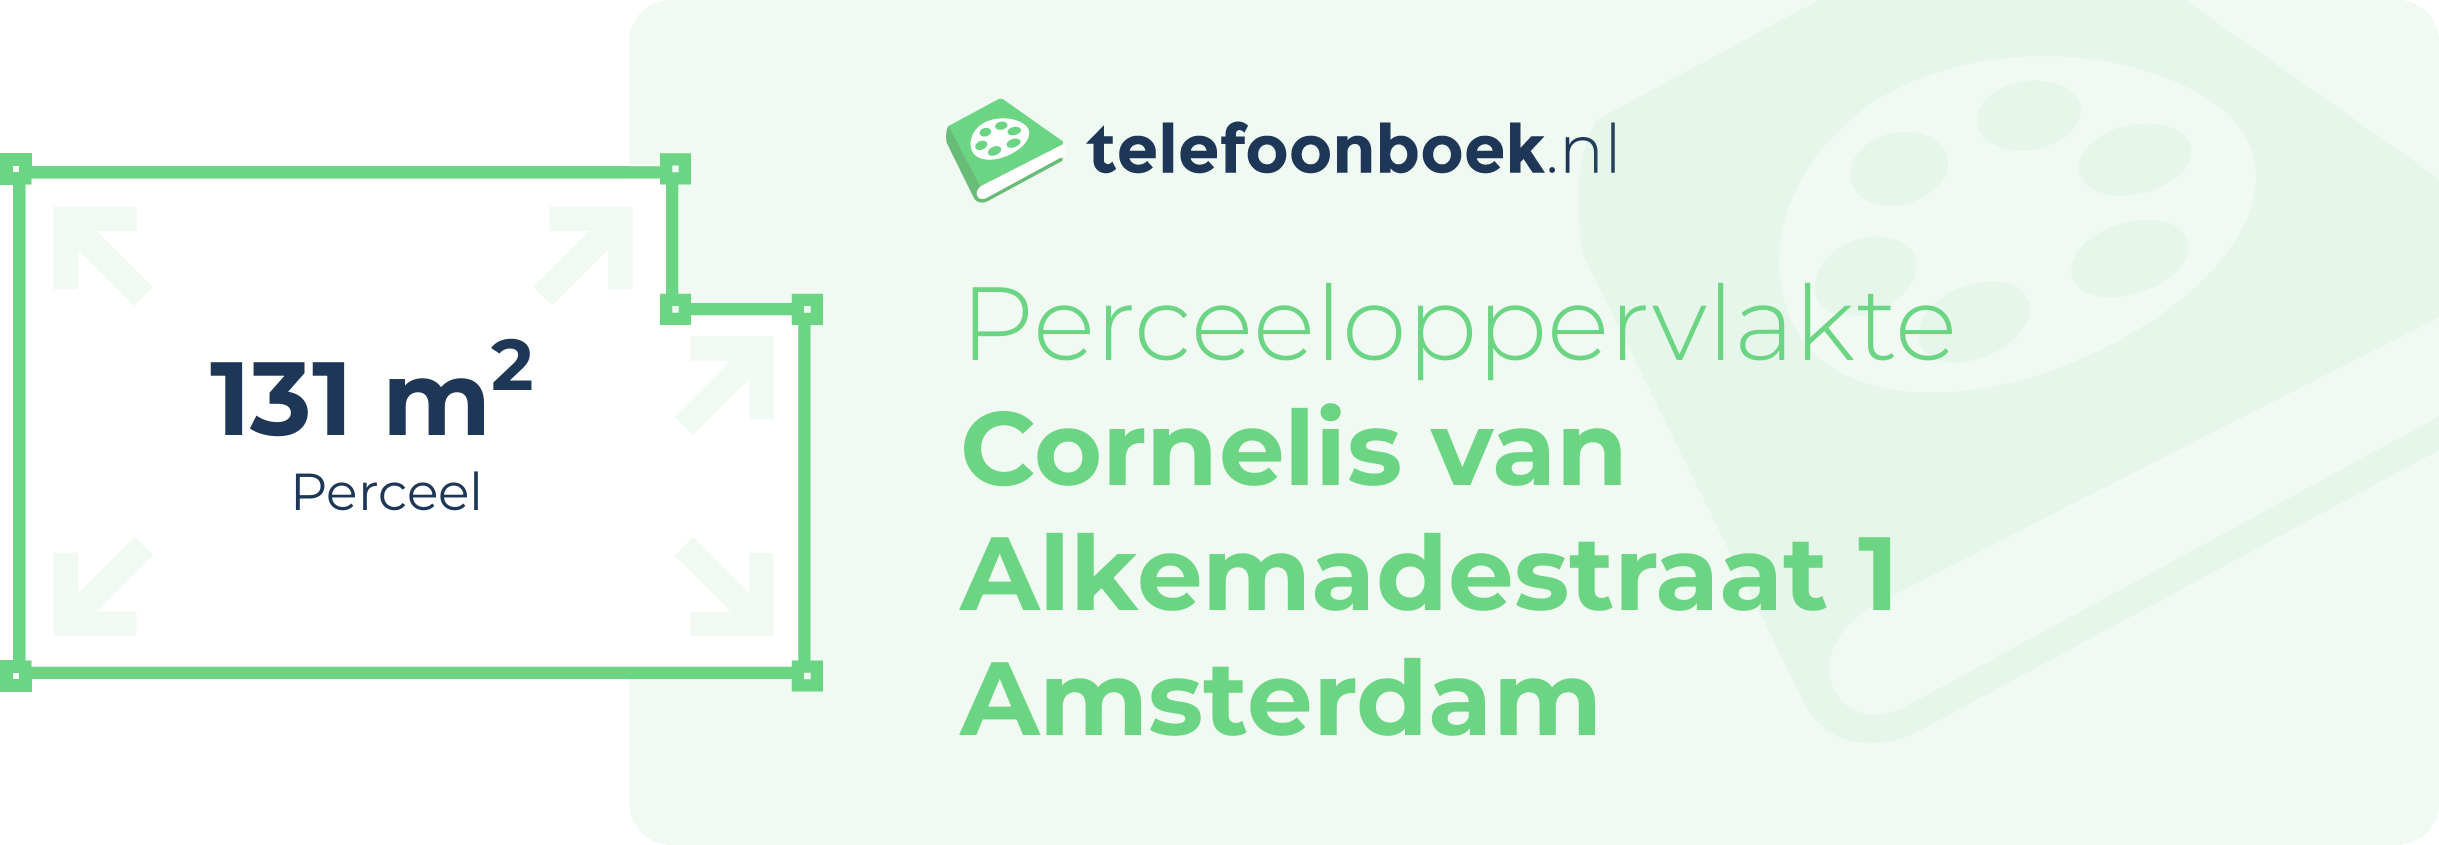 Perceeloppervlakte Cornelis Van Alkemadestraat 1 Amsterdam